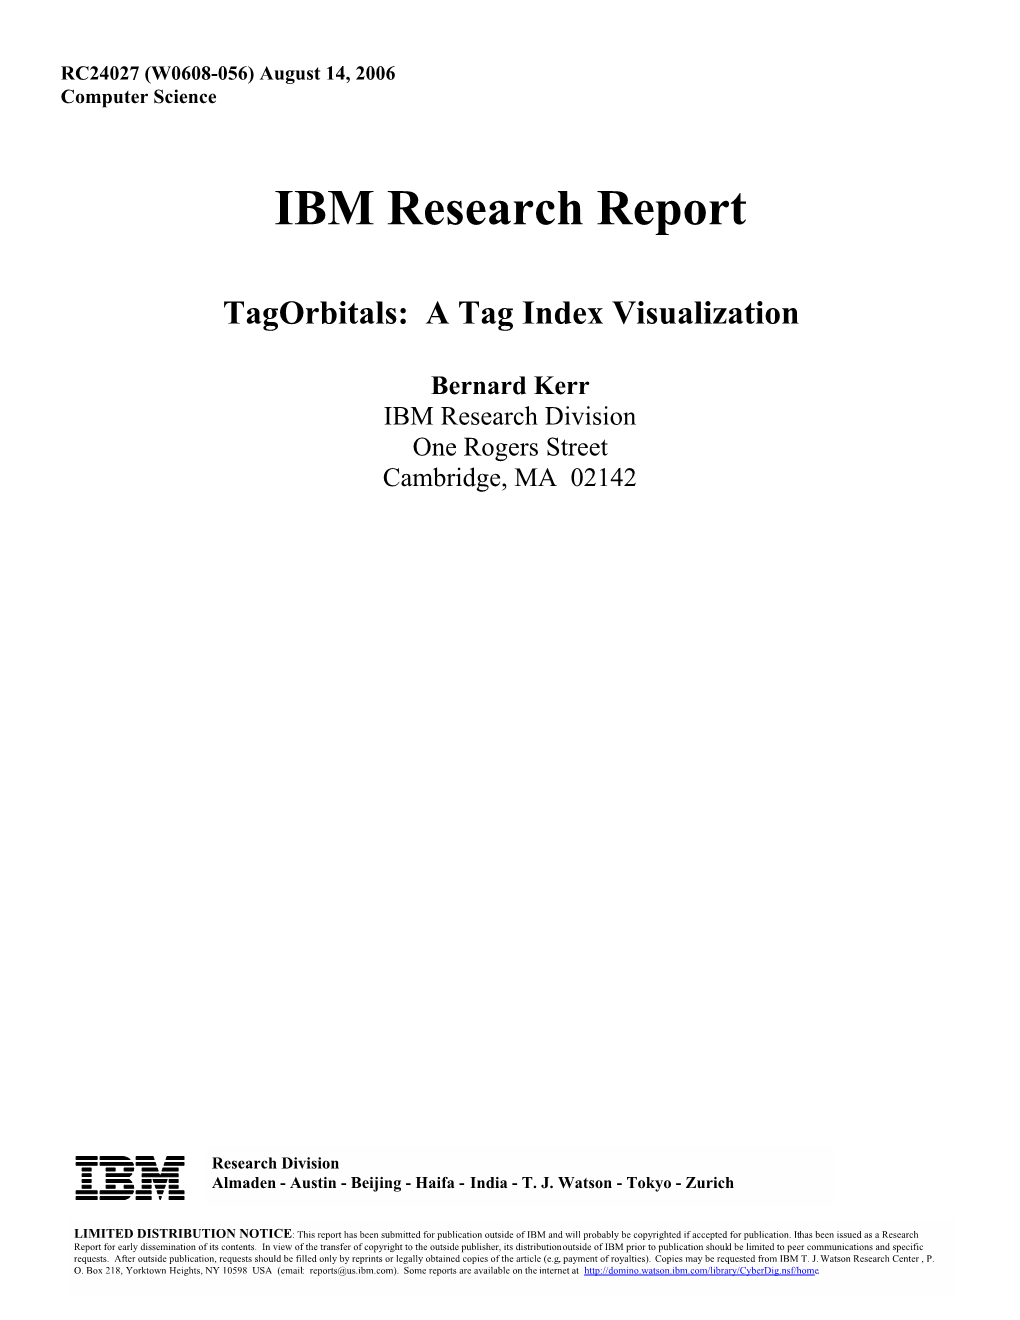 IBM Research Report Tagorbitals